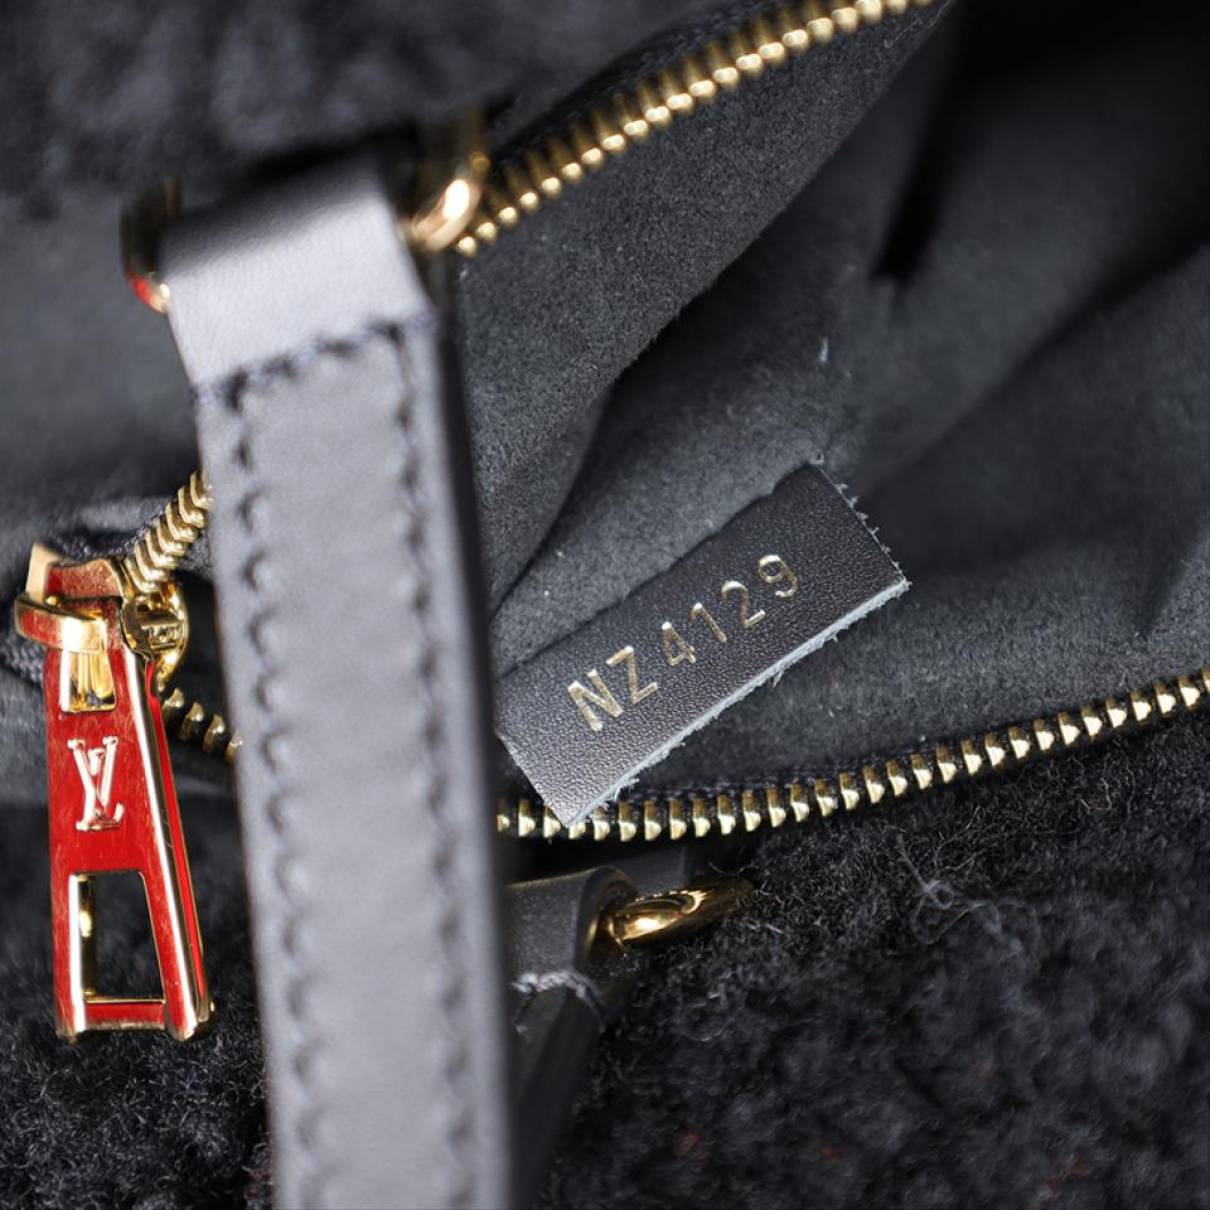 Onthego wool handbag Louis Vuitton Black in Wool - 27484802